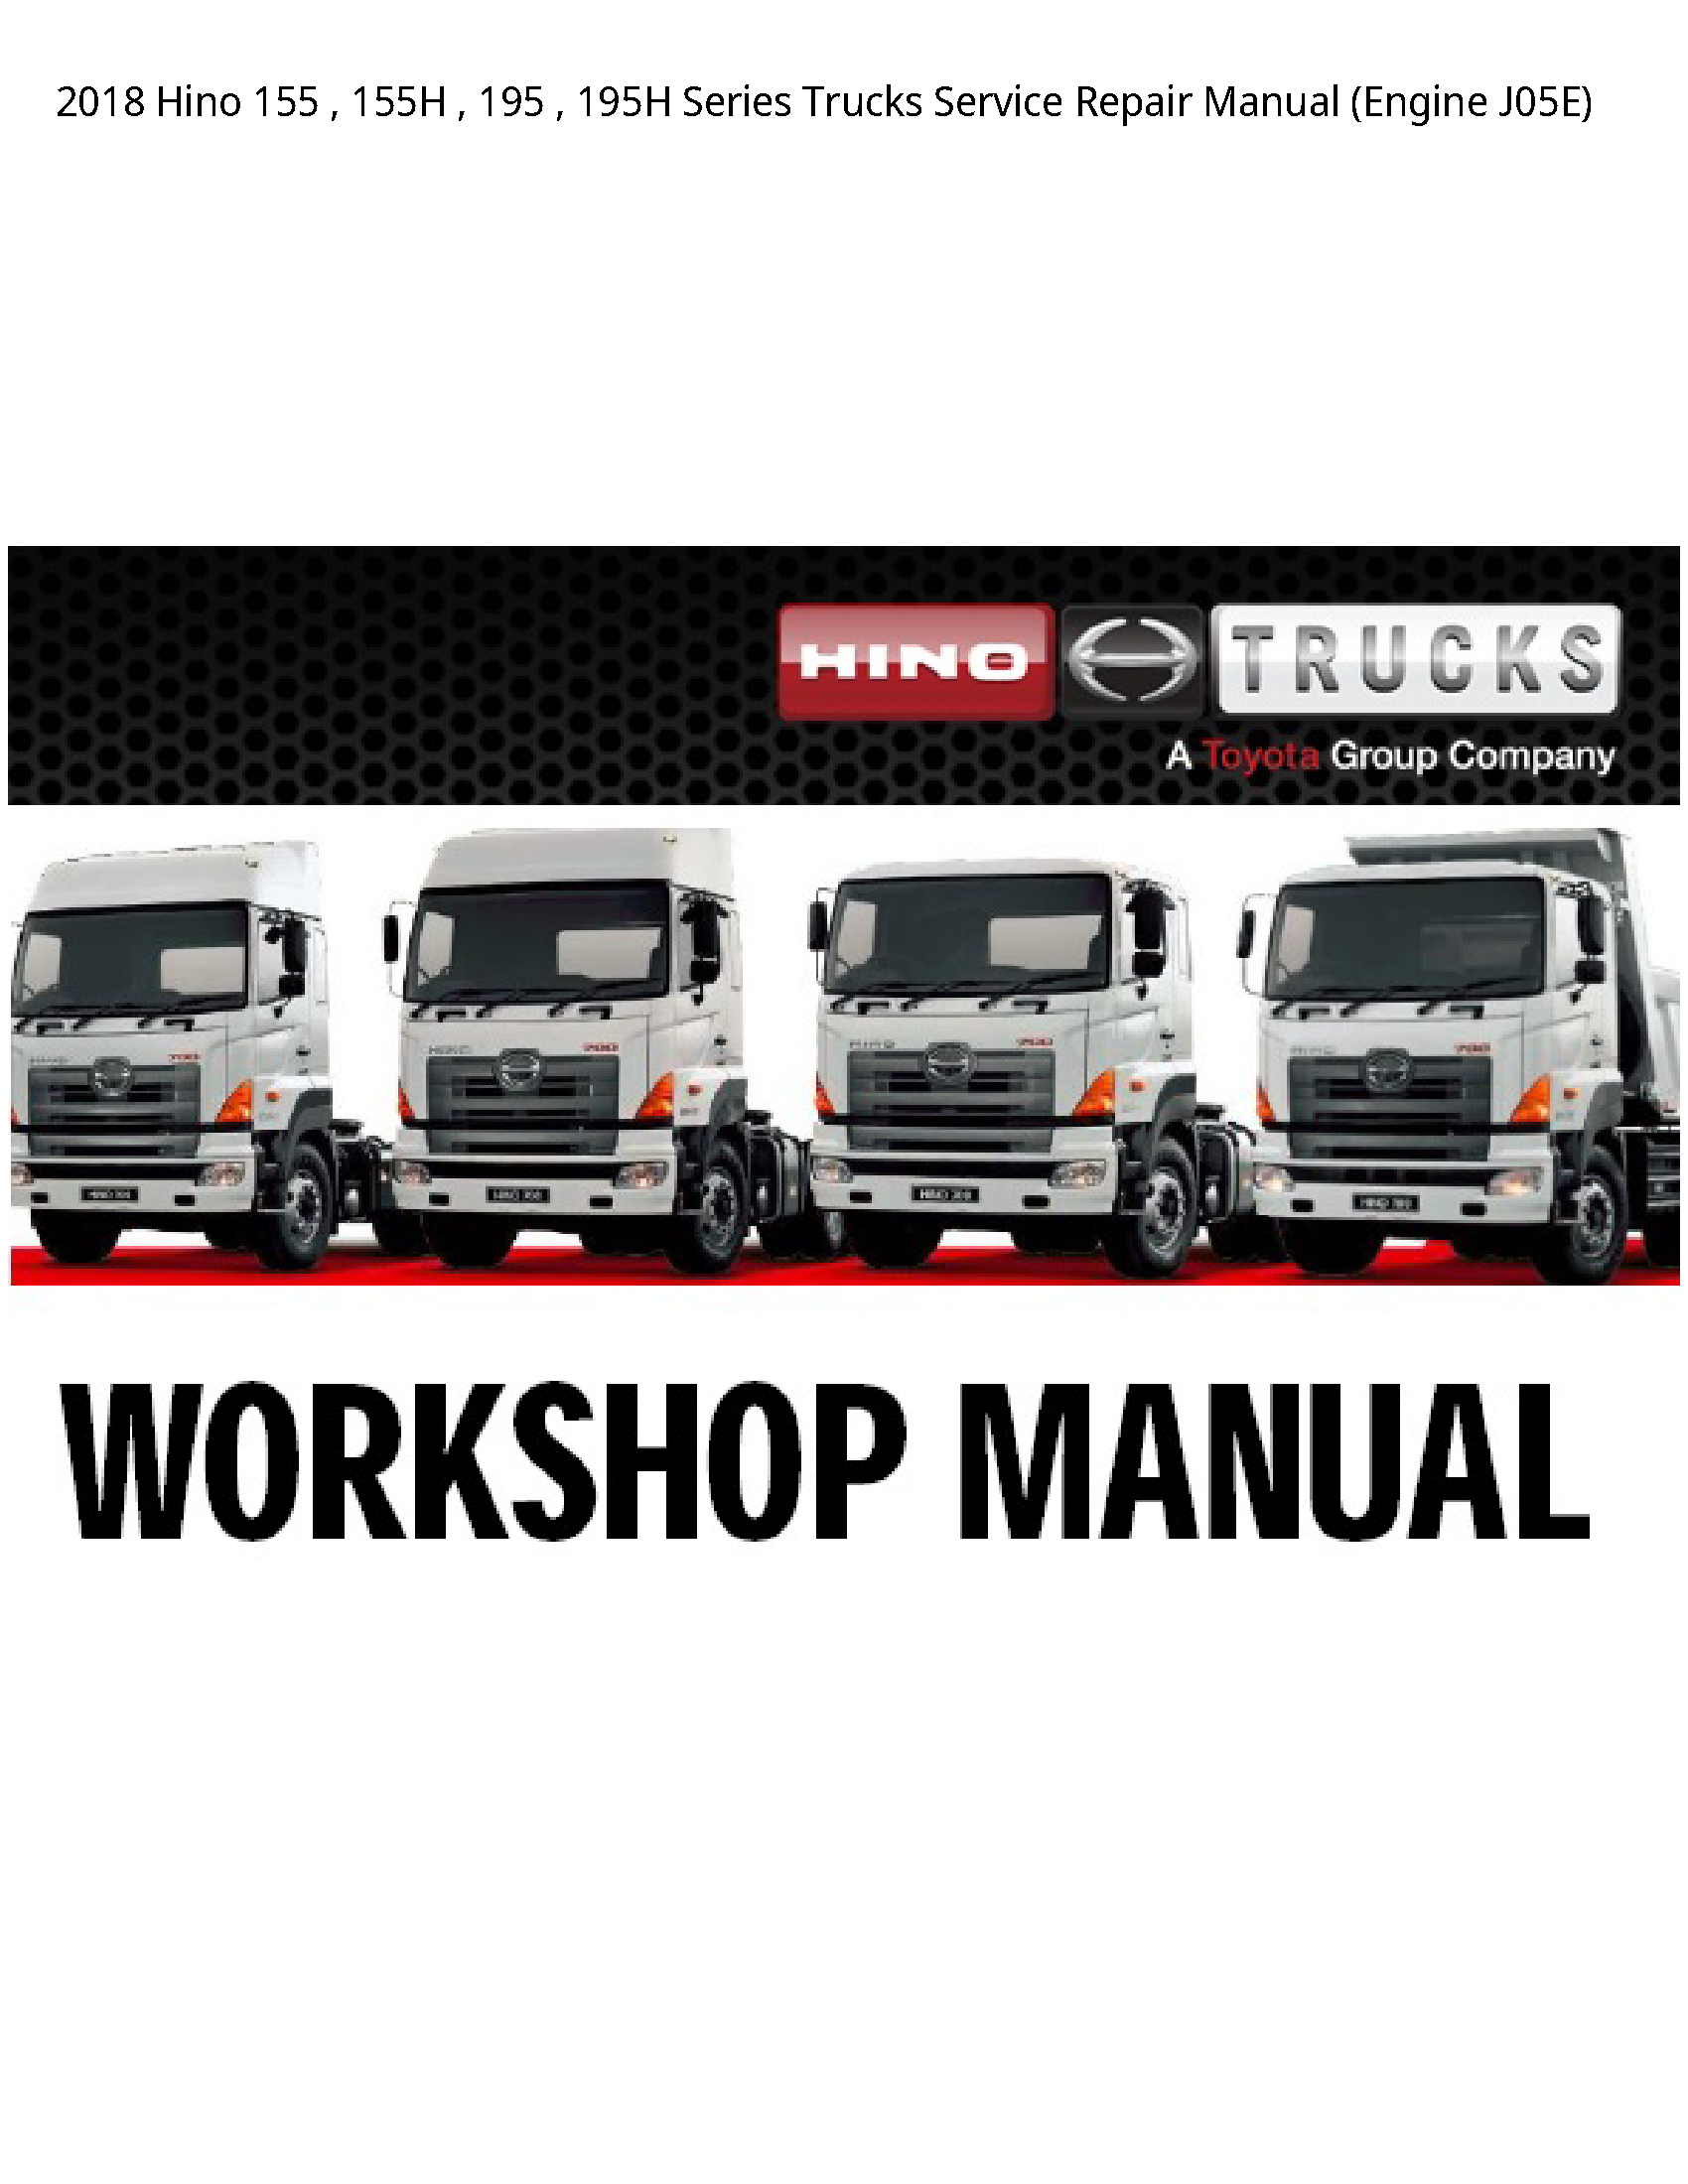 Hino 155 Series Trucks manual